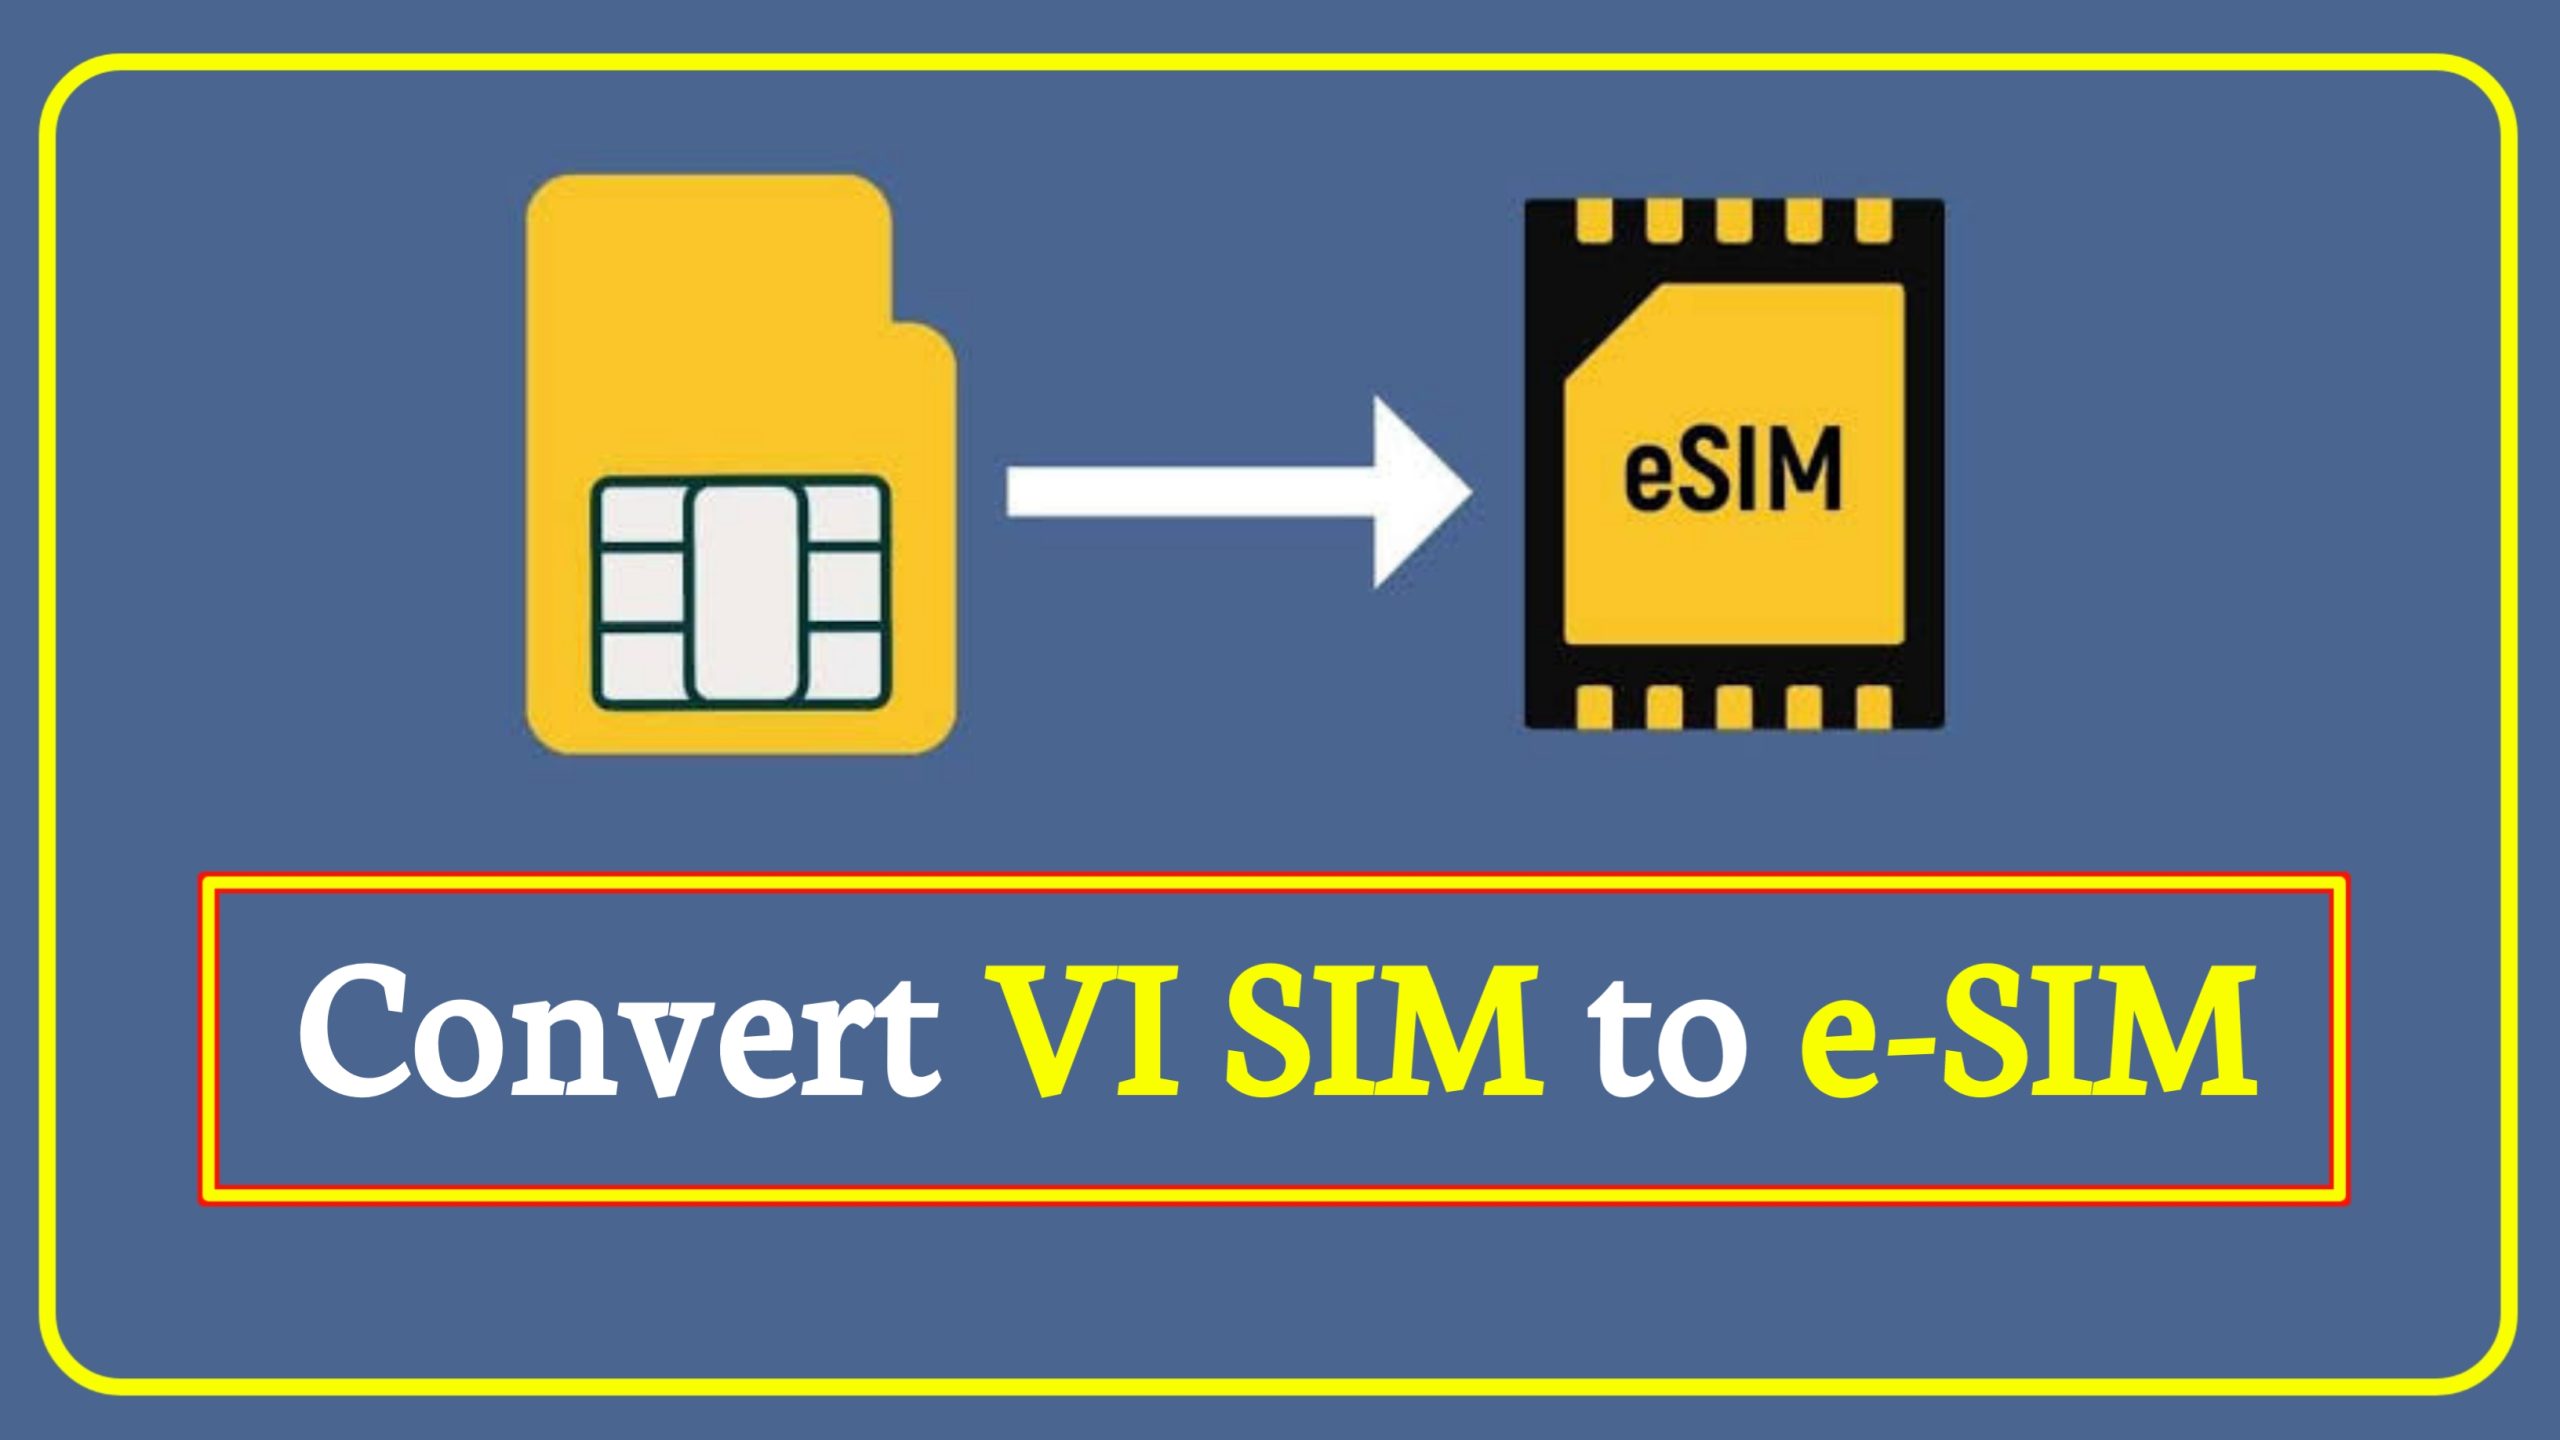 How to Convert VI SIM to e-SIM in Hindi | VI SIM ko e-SIM me Convert Kaise Kare